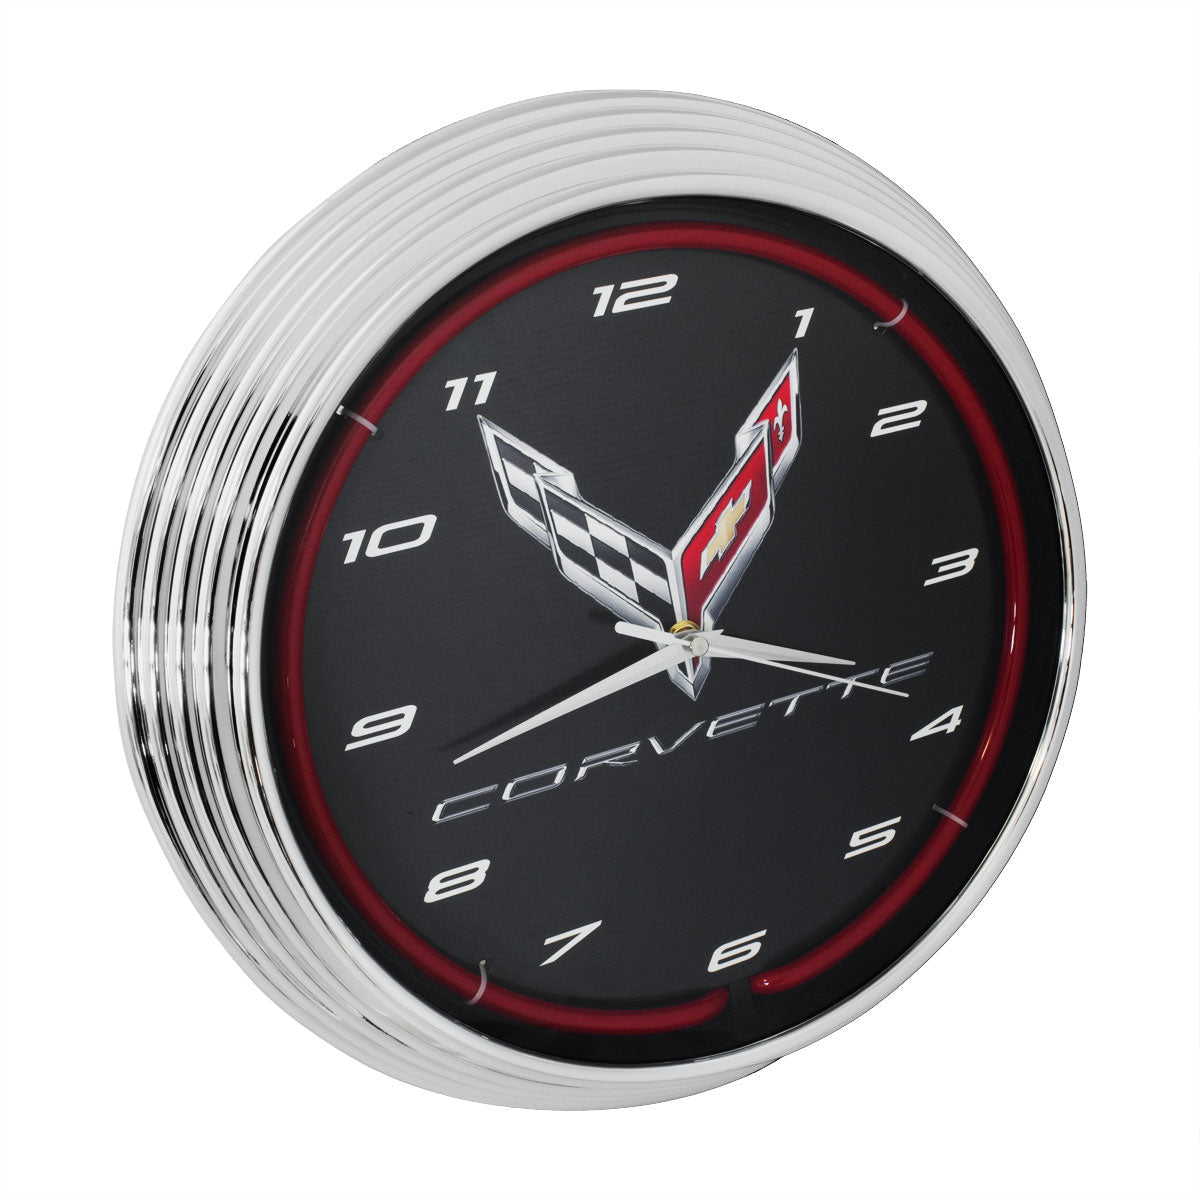 2020 C8 Corvette Red Light Up Neon Garage Wall Clock Crossed Flags Logo